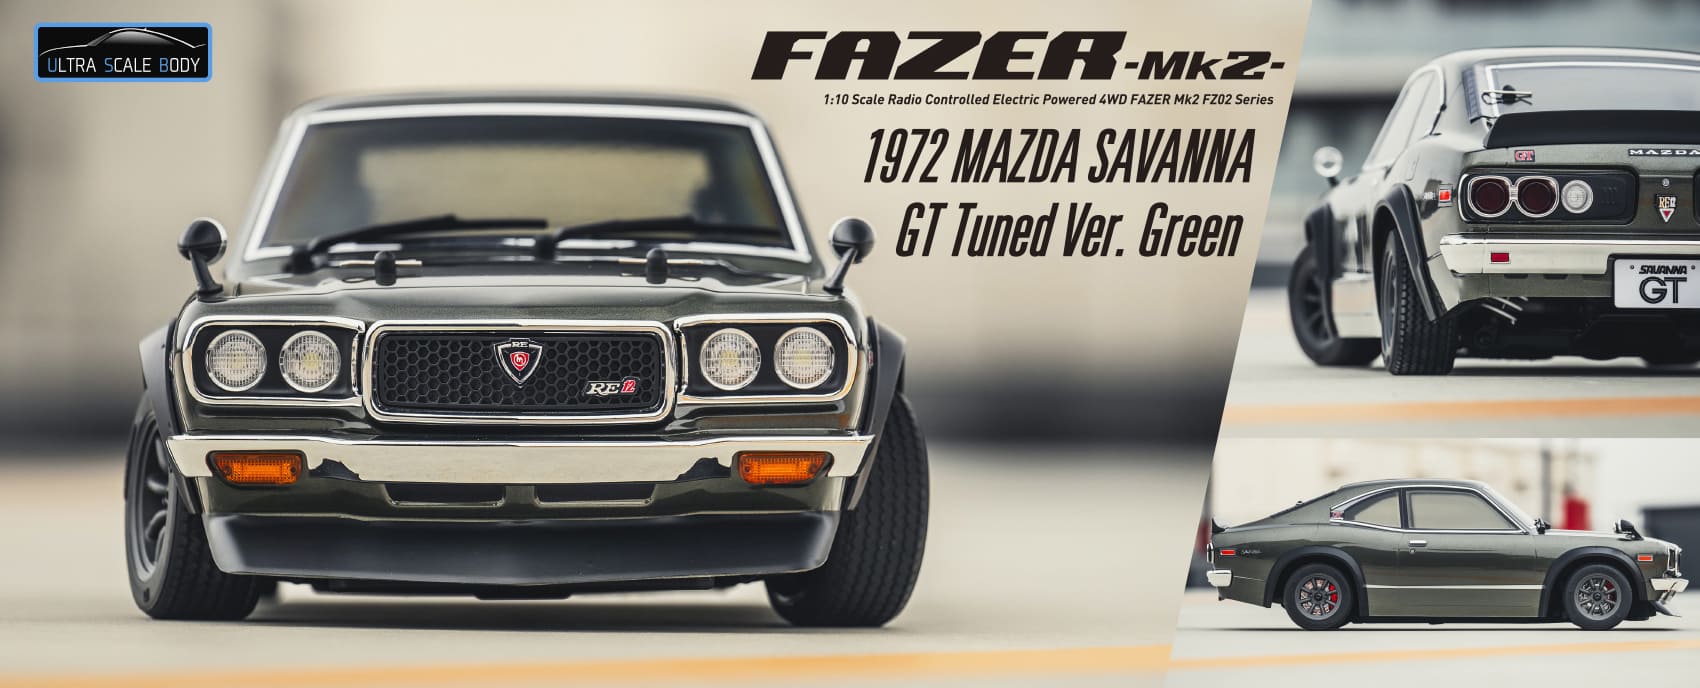 1/10 Scale Radio Controlled Electric Powered 4WD FAZER Mk2 FZ02 Series Readyset 1972 MAZDA SAVANNA GT Tuned Ver.